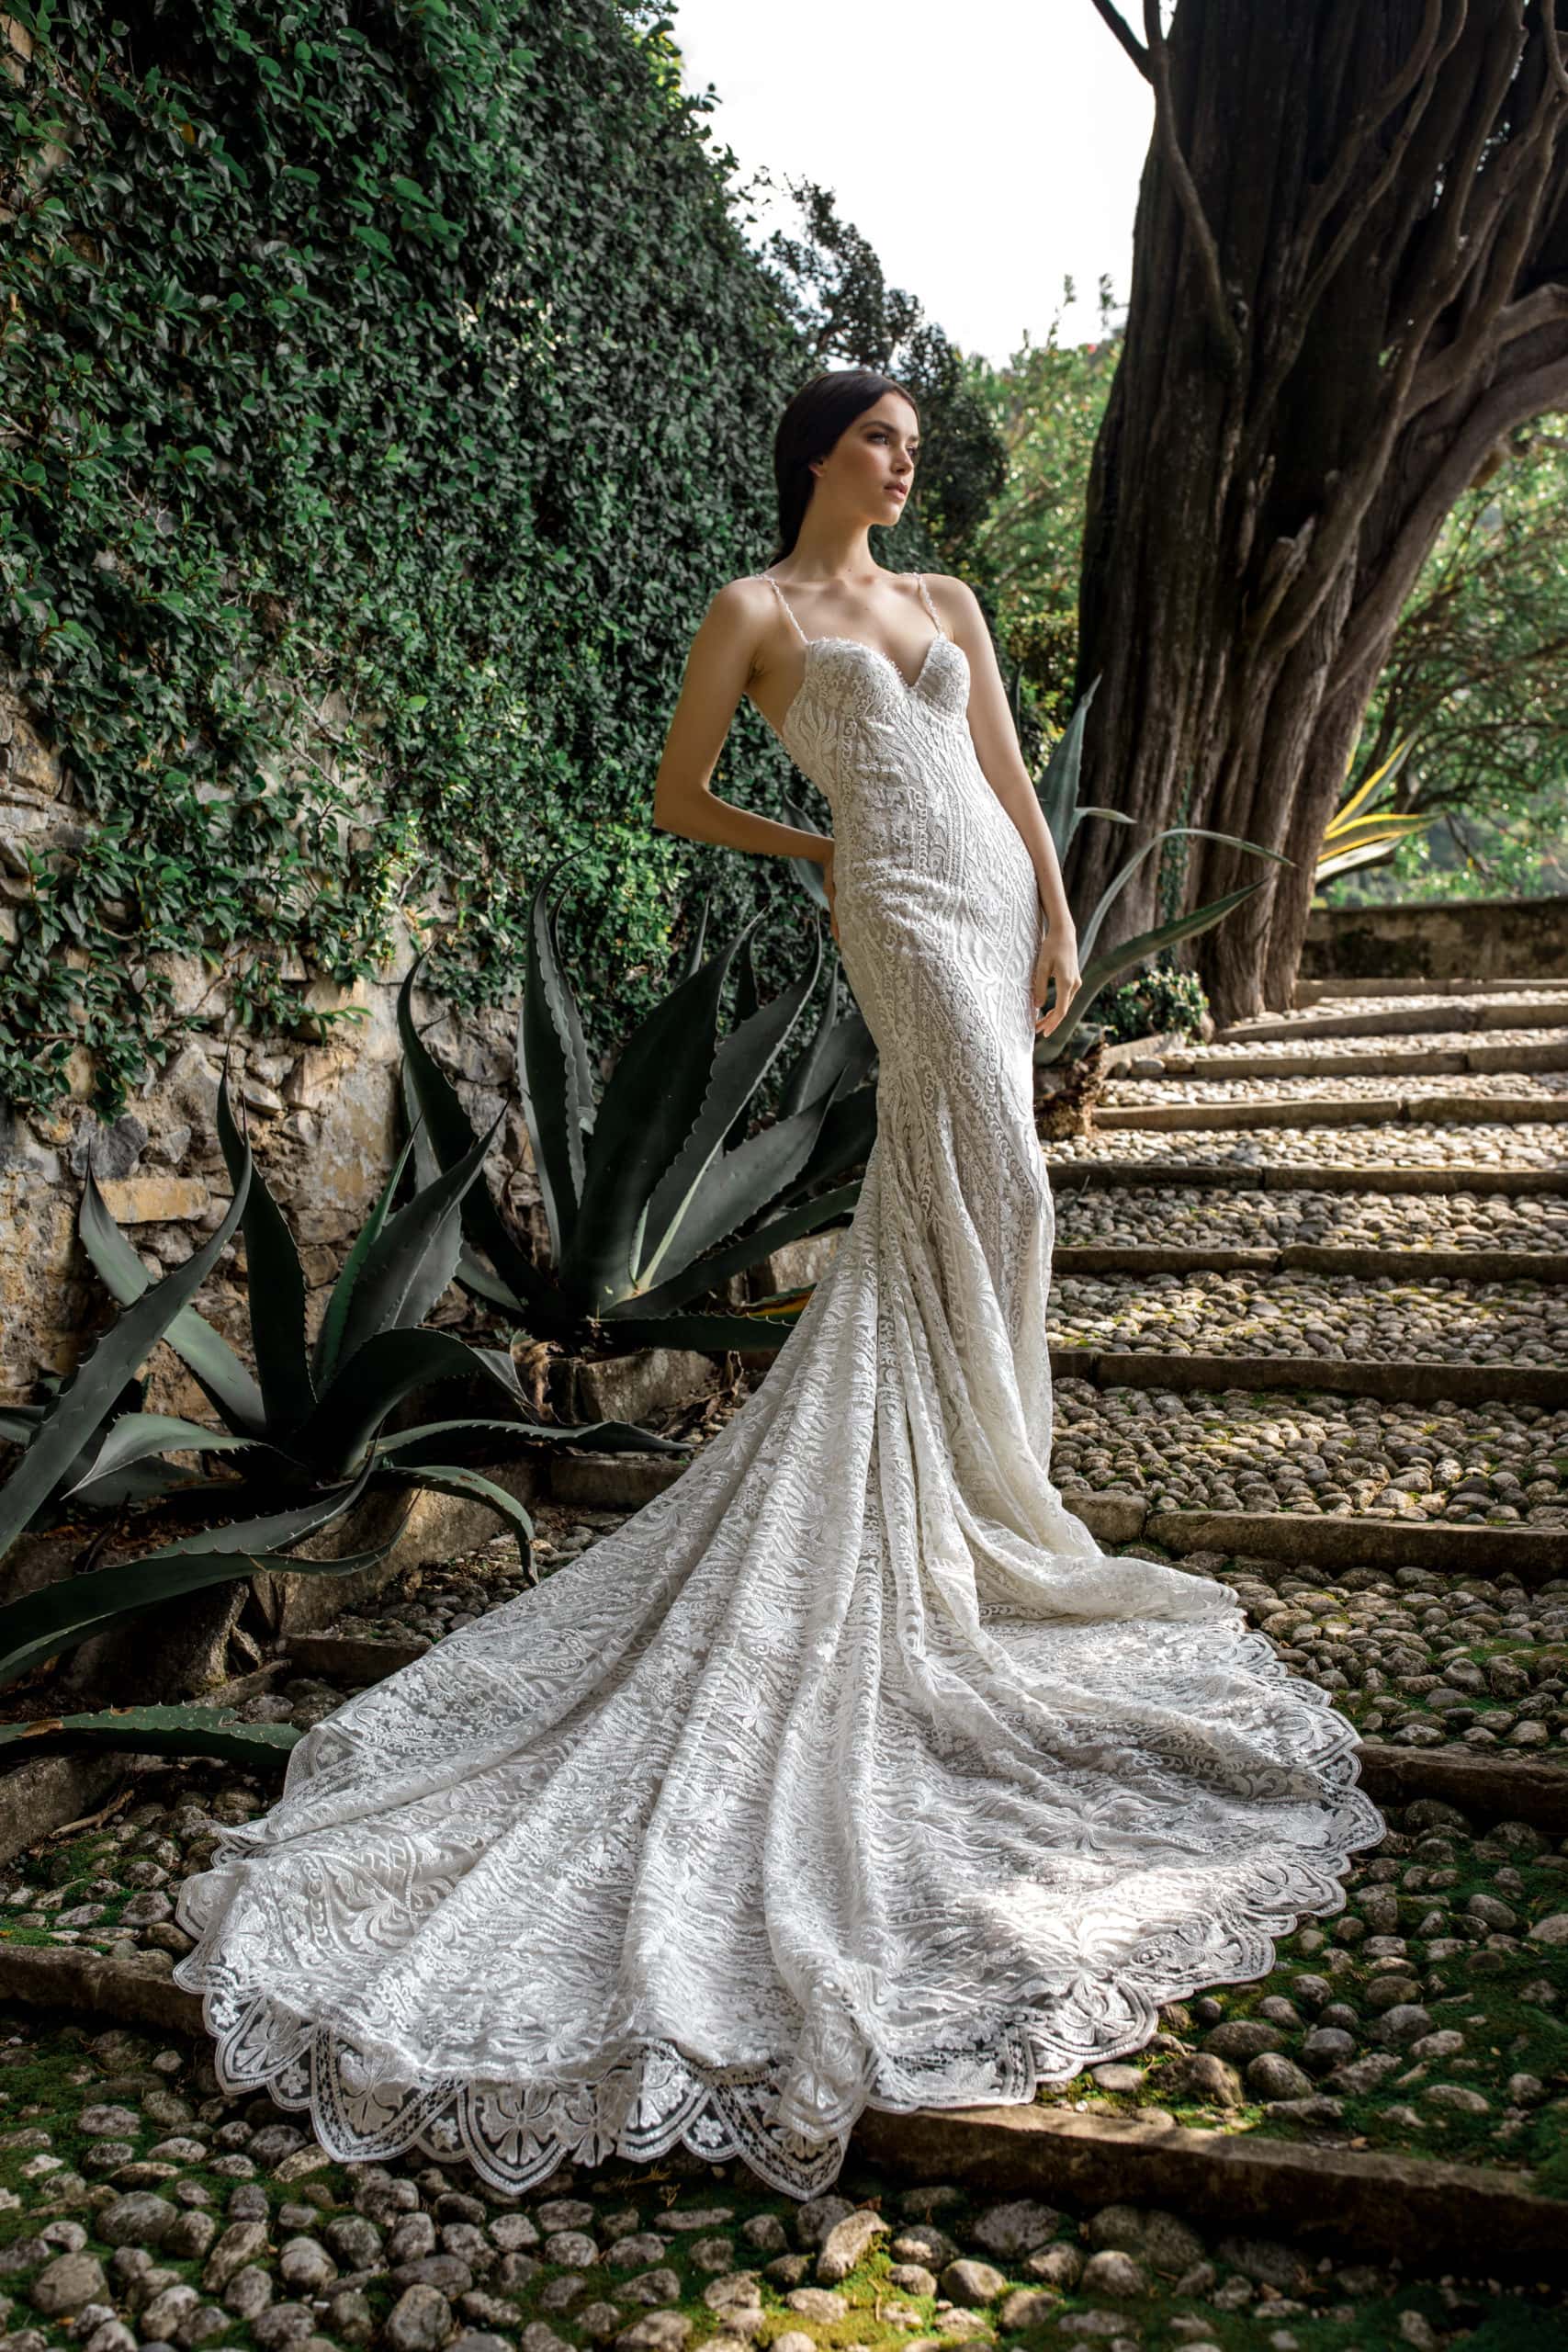 Lace bridal gown train on steps of Villa Cipressi